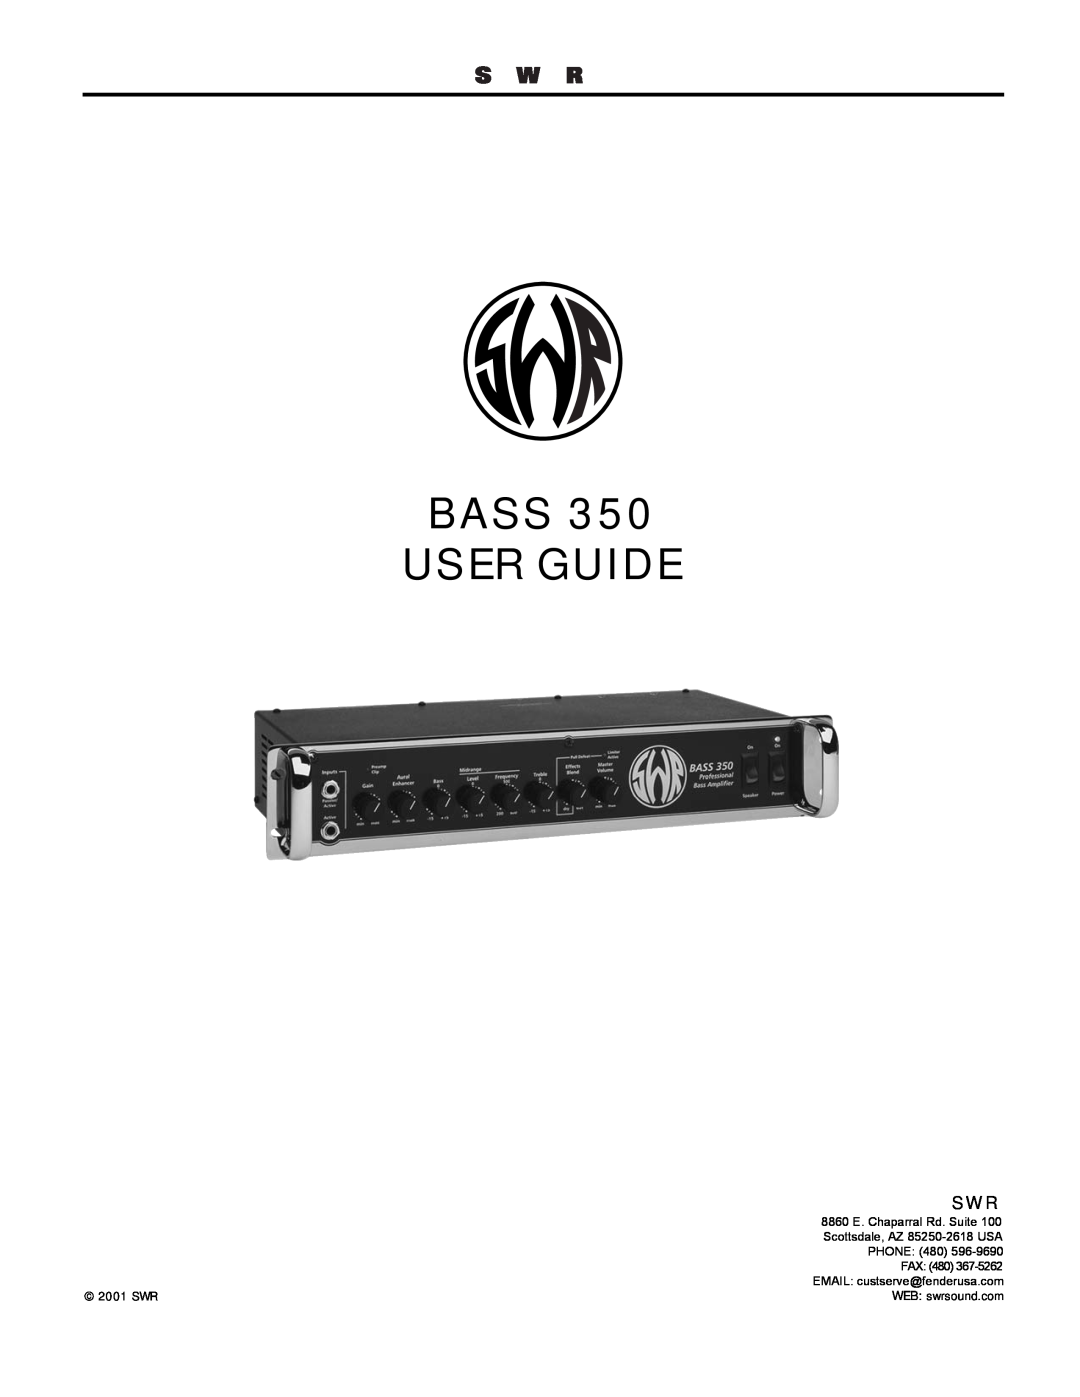 SWR Sound 350 manual Bass User Guide, S W R, 8860 E. Chaparral Rd. Suite, Scottsdale, AZ 85250-2618USA, Phone, Fax 